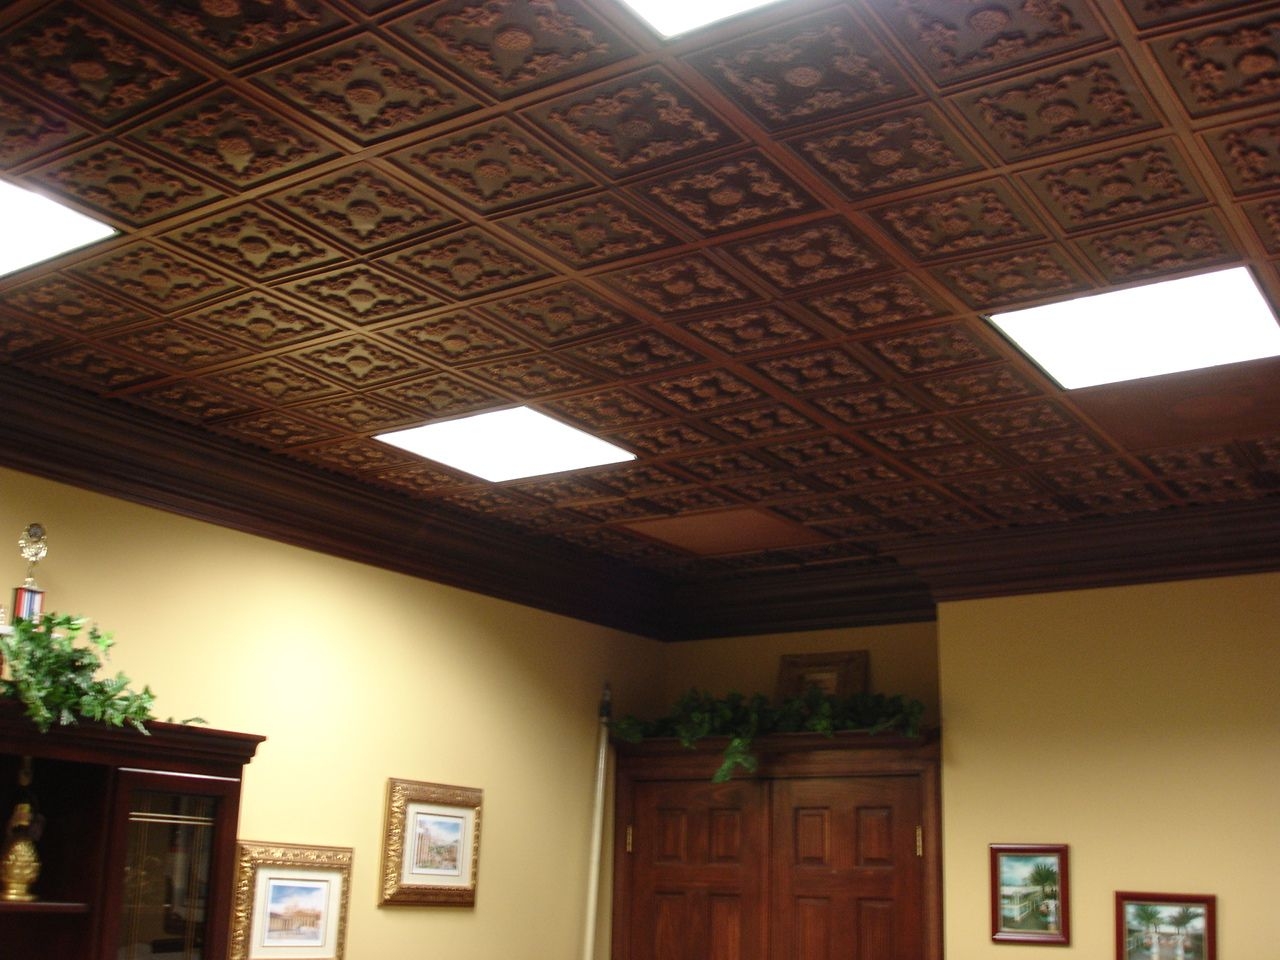 Basement Ceiling Tile Lights Basement Ceiling Tile Lights types of ceiling tiles wearefound home design 1280 X 960